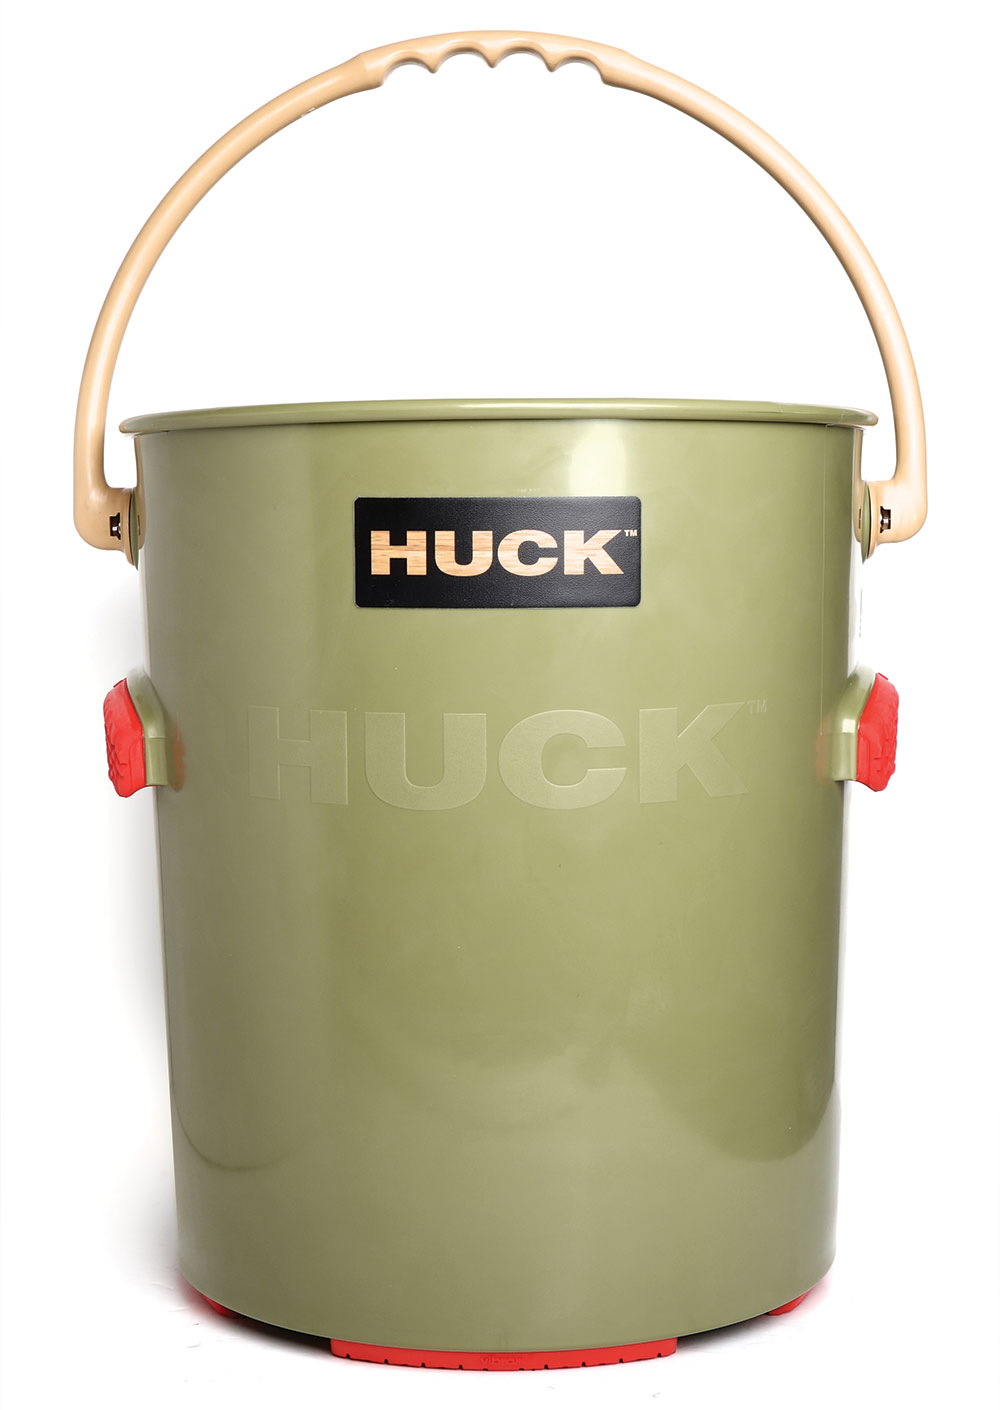 A green 5-gallon bucket with orange handles and black "Huck" logo.